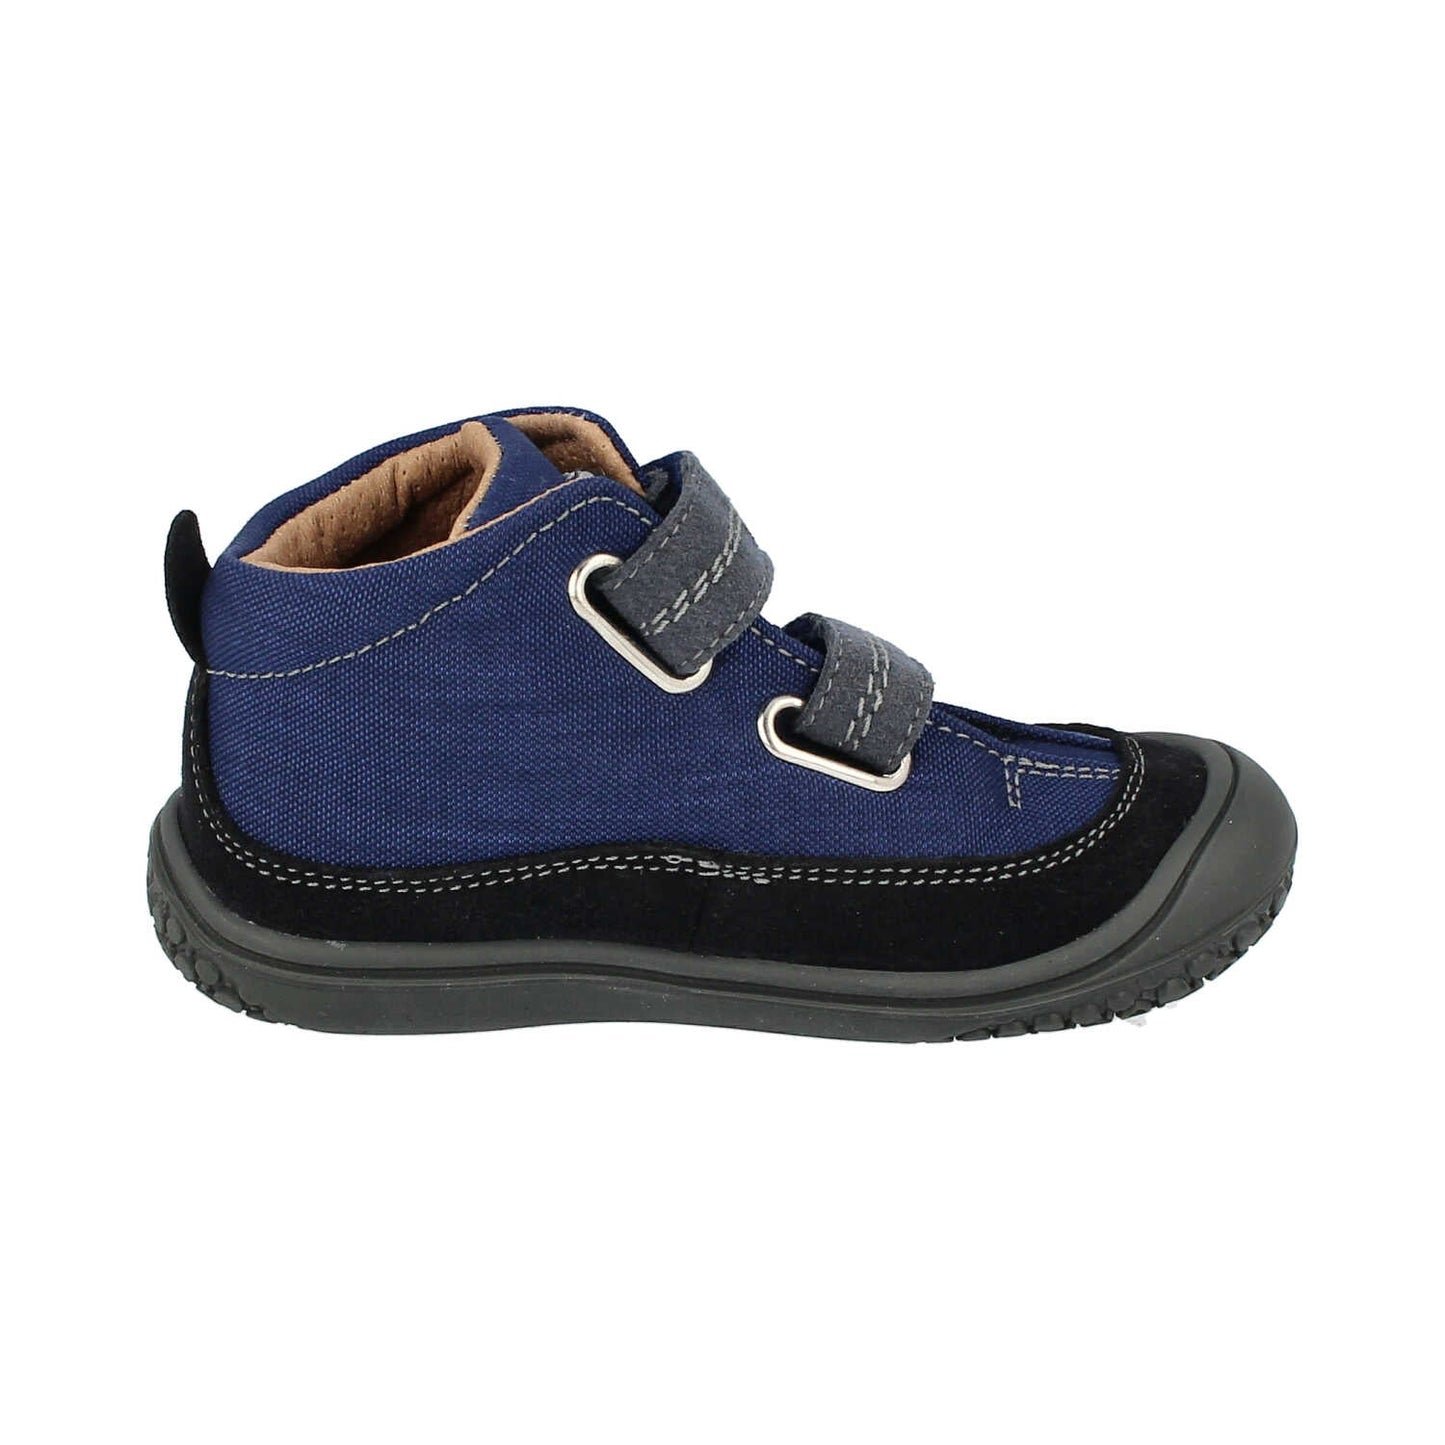 Filii Viper Velcro "Medium" barfods high sneakers til børn i farven ocean, inderside